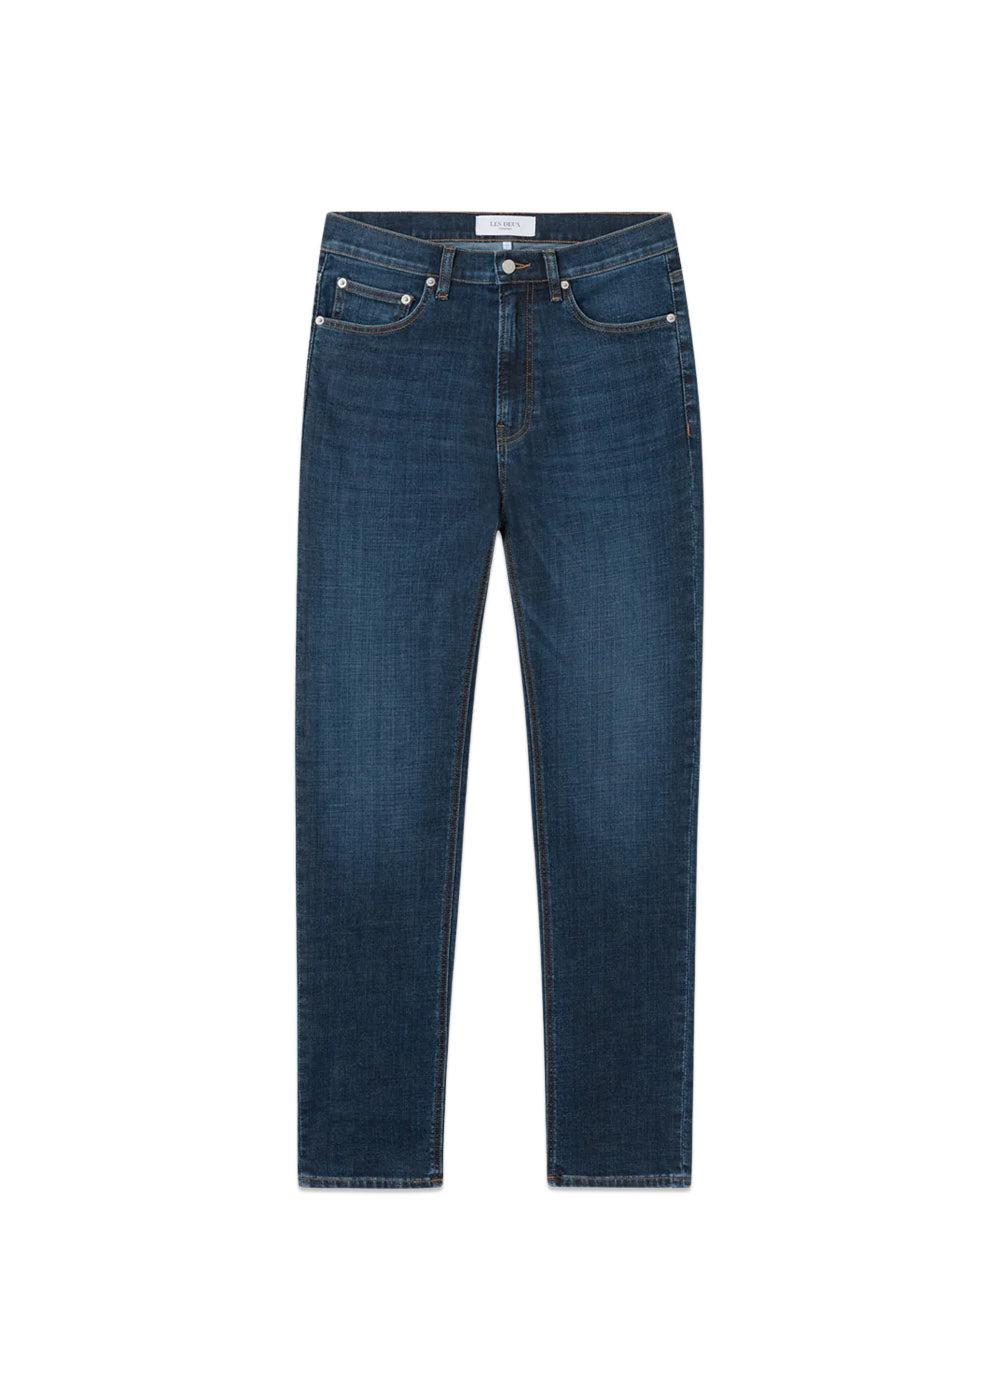 Russell Regular Fit Jeans 2.0 - Medium Blue Wash